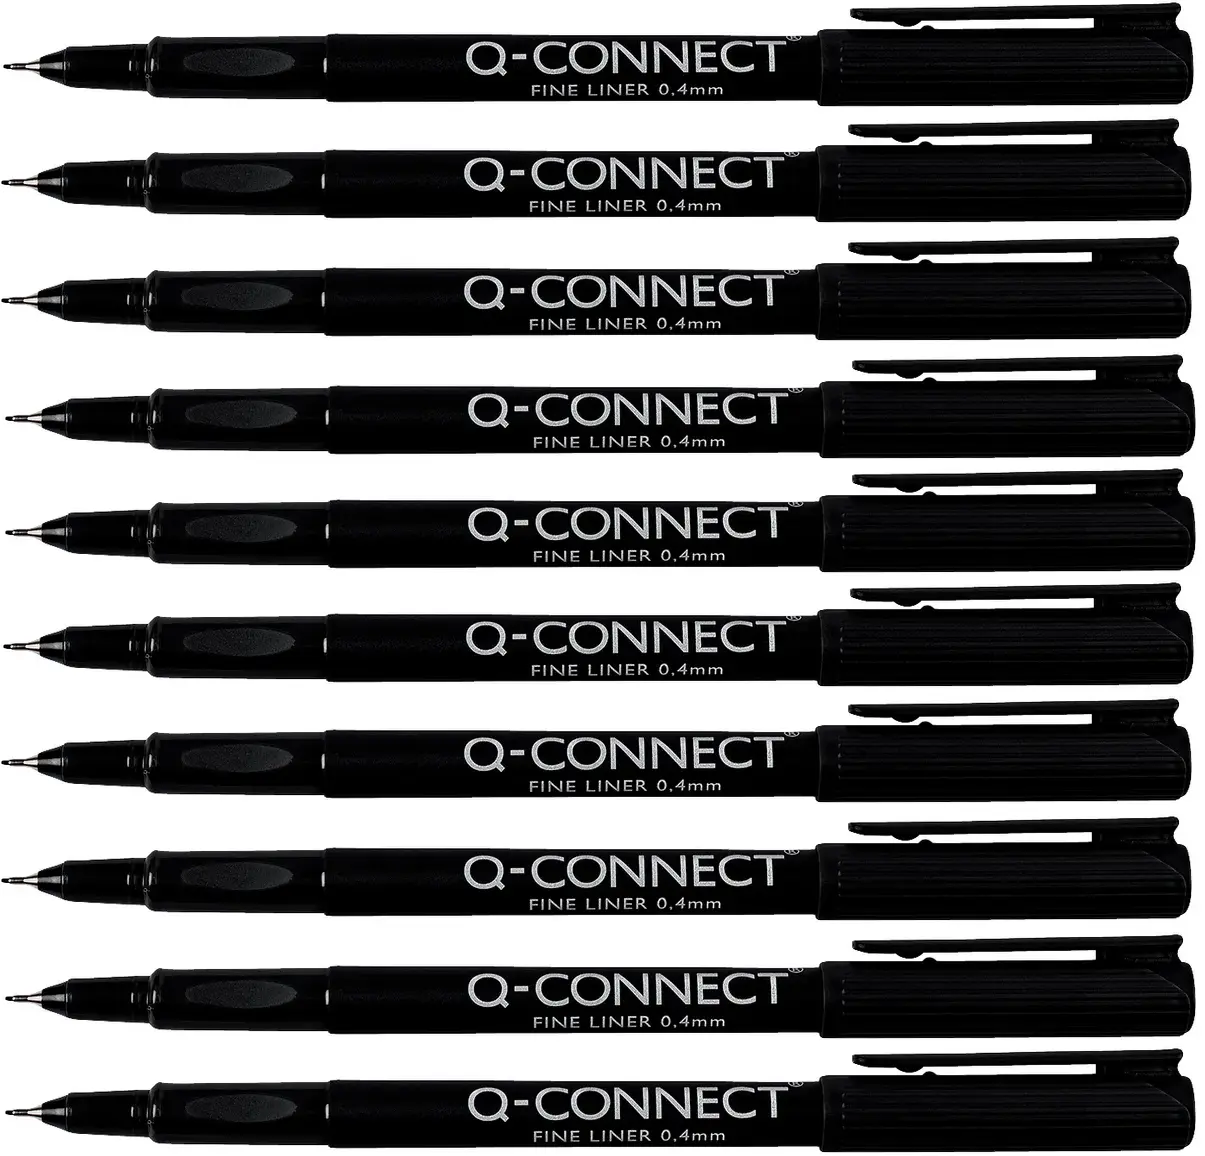 Q-CONNECT Feinliner, 0,4mm, schwarz, (10 Stück)